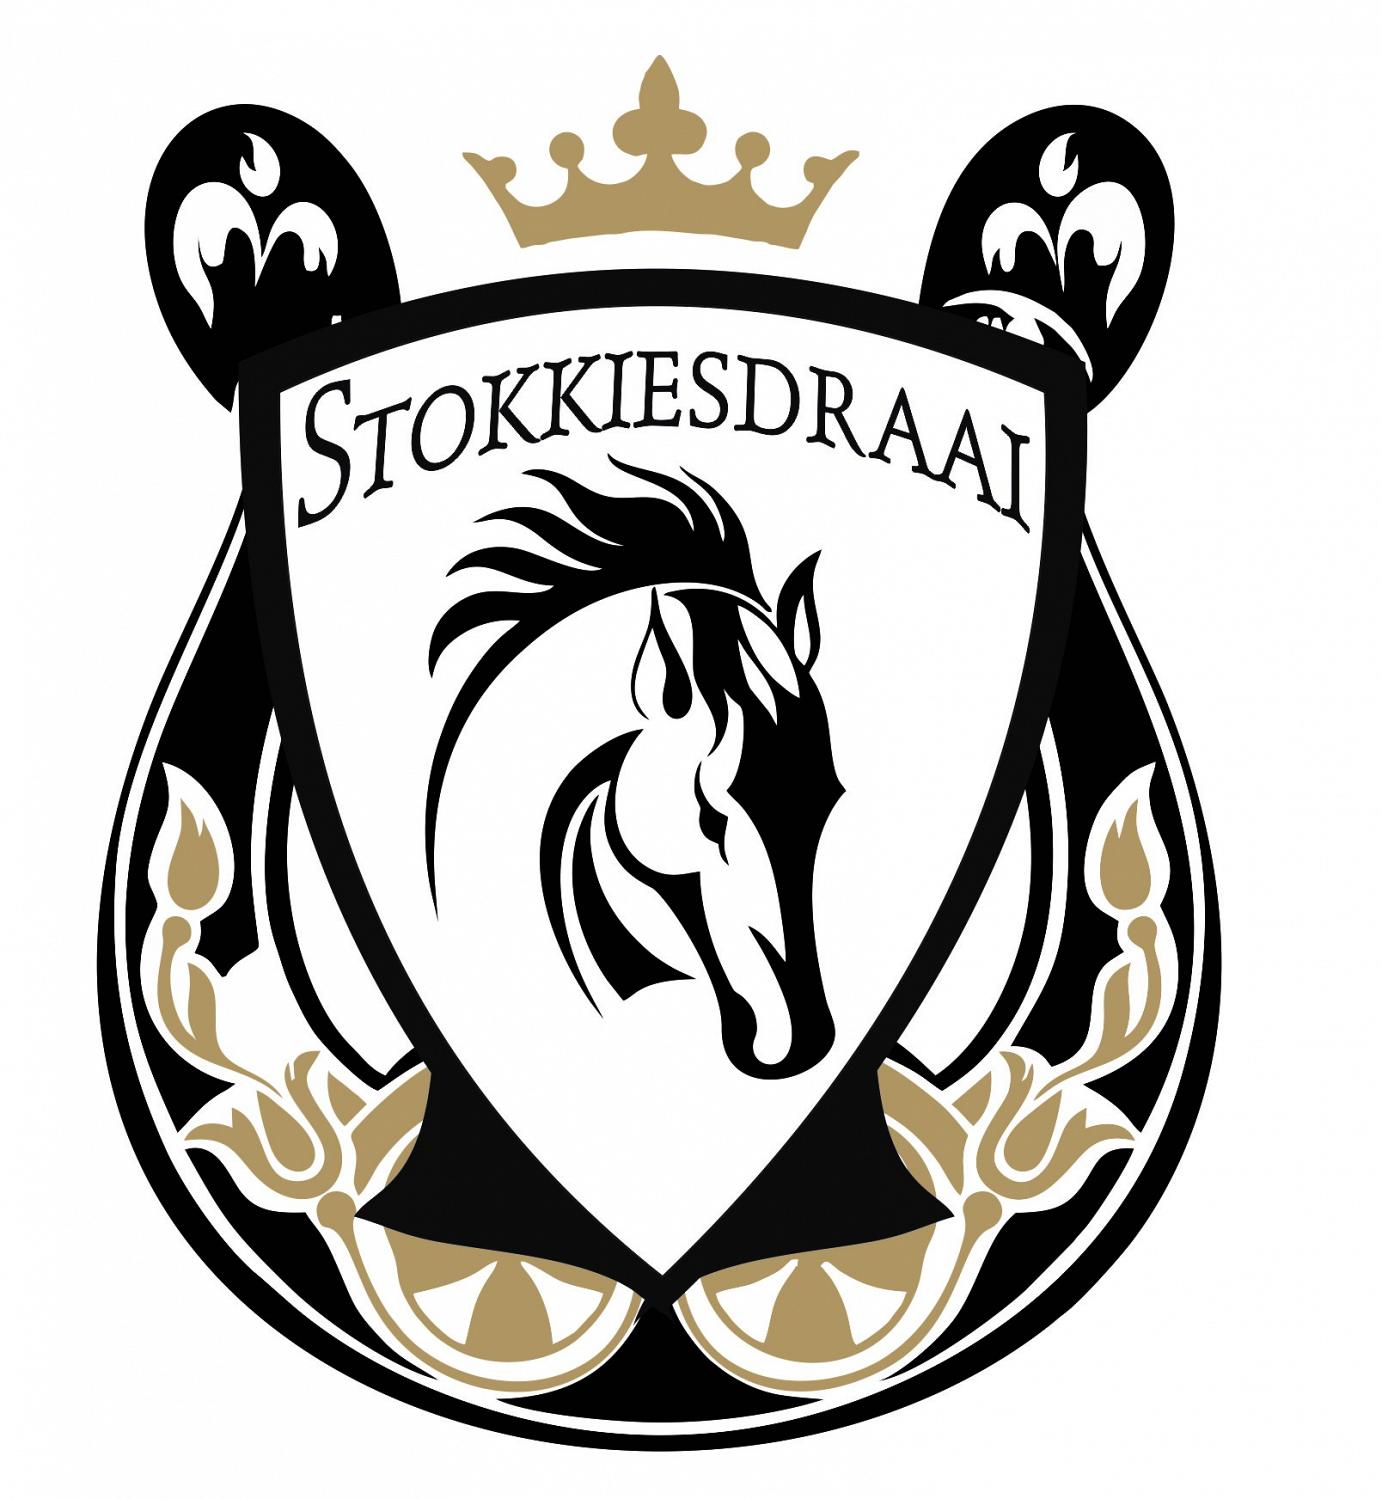 Stokkiesdraai Restaurant and Equestrian Centre